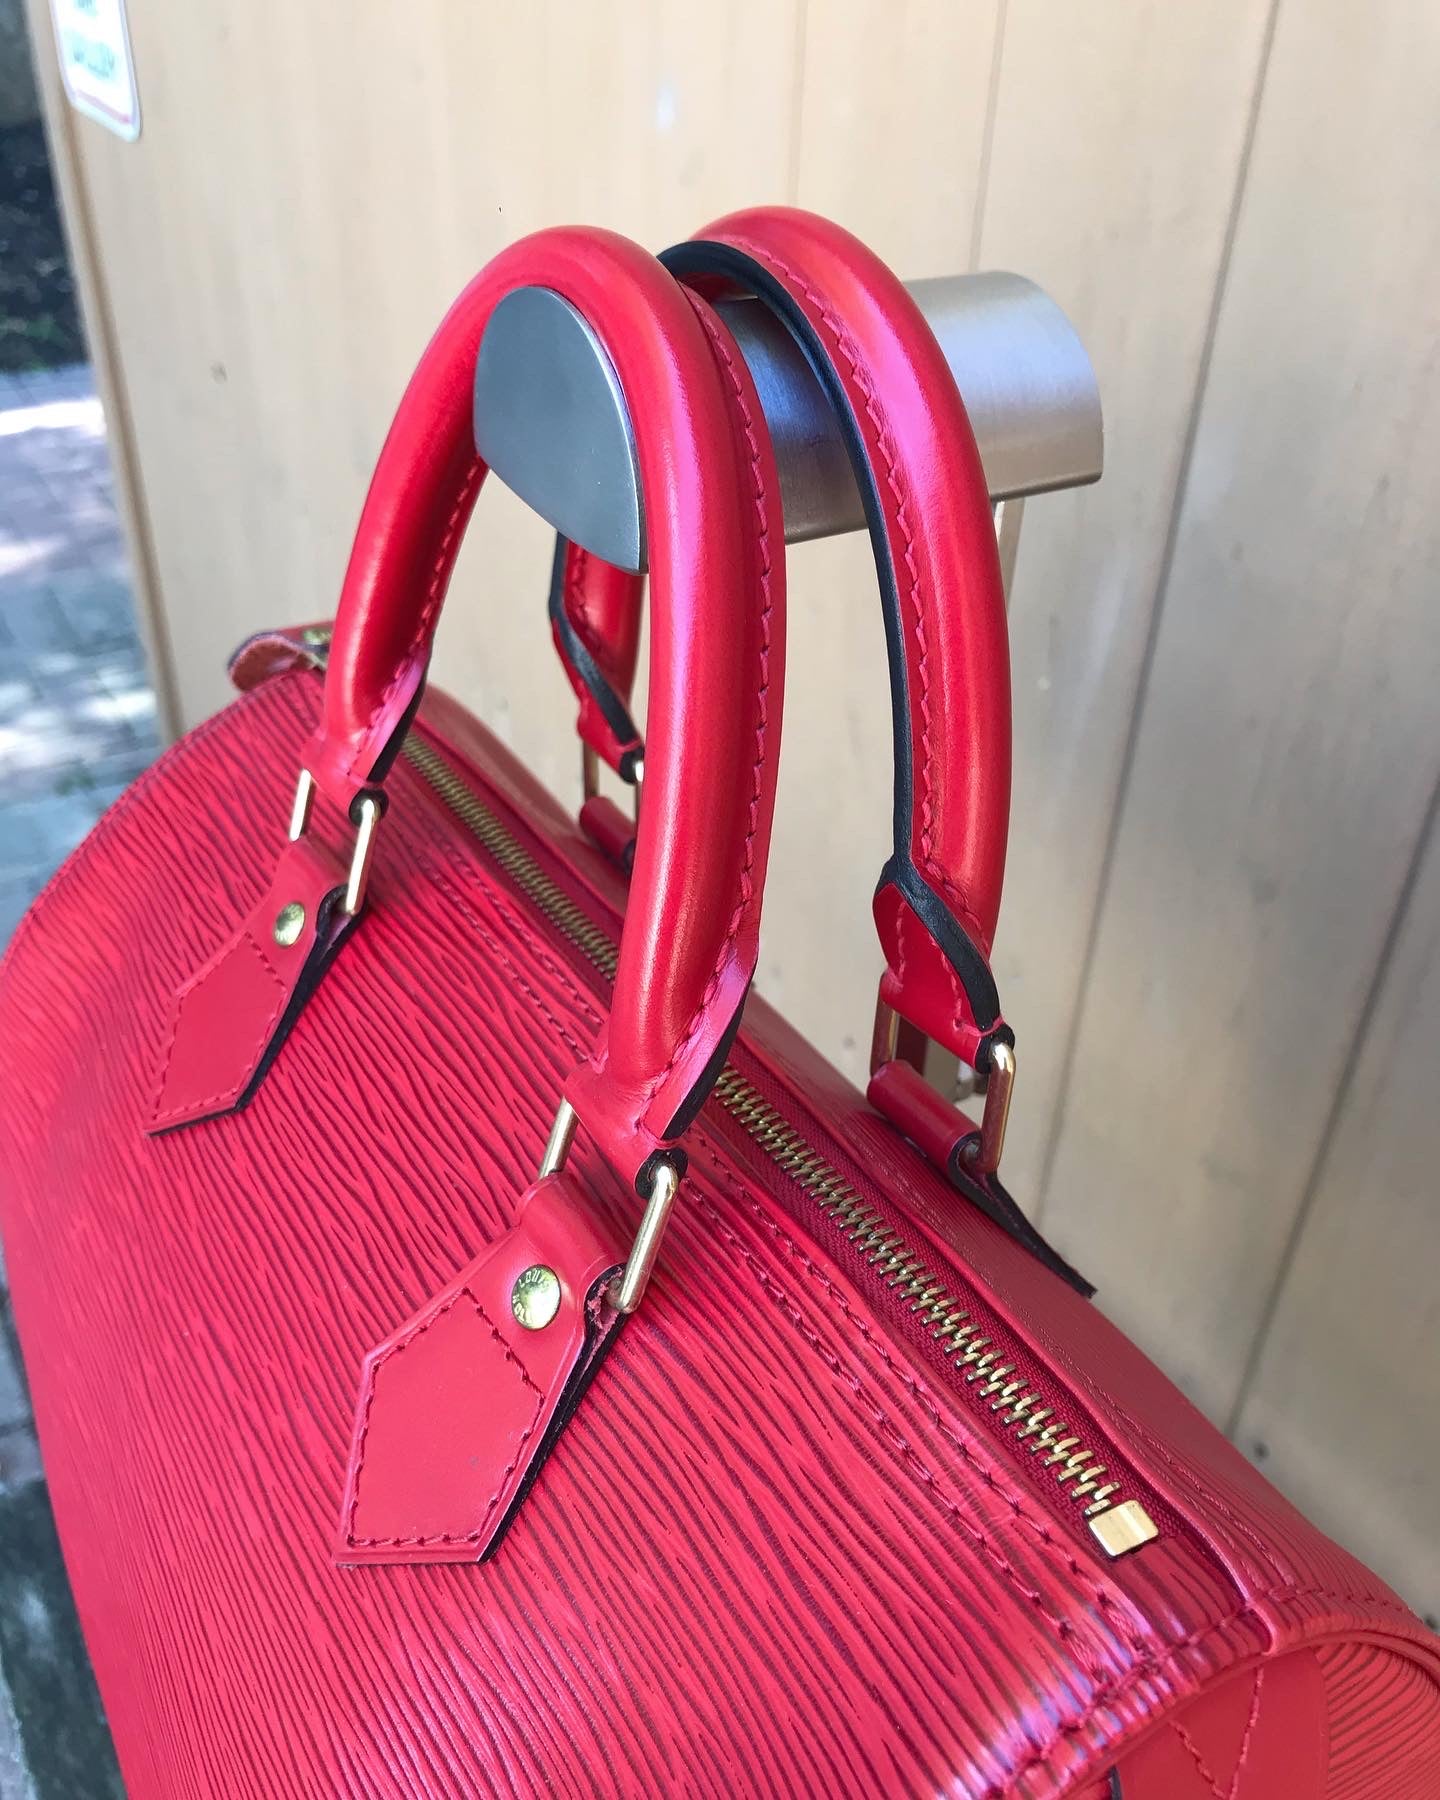 Louis Vuitton Speedy 25 Epi Red Handbag Used (6729)